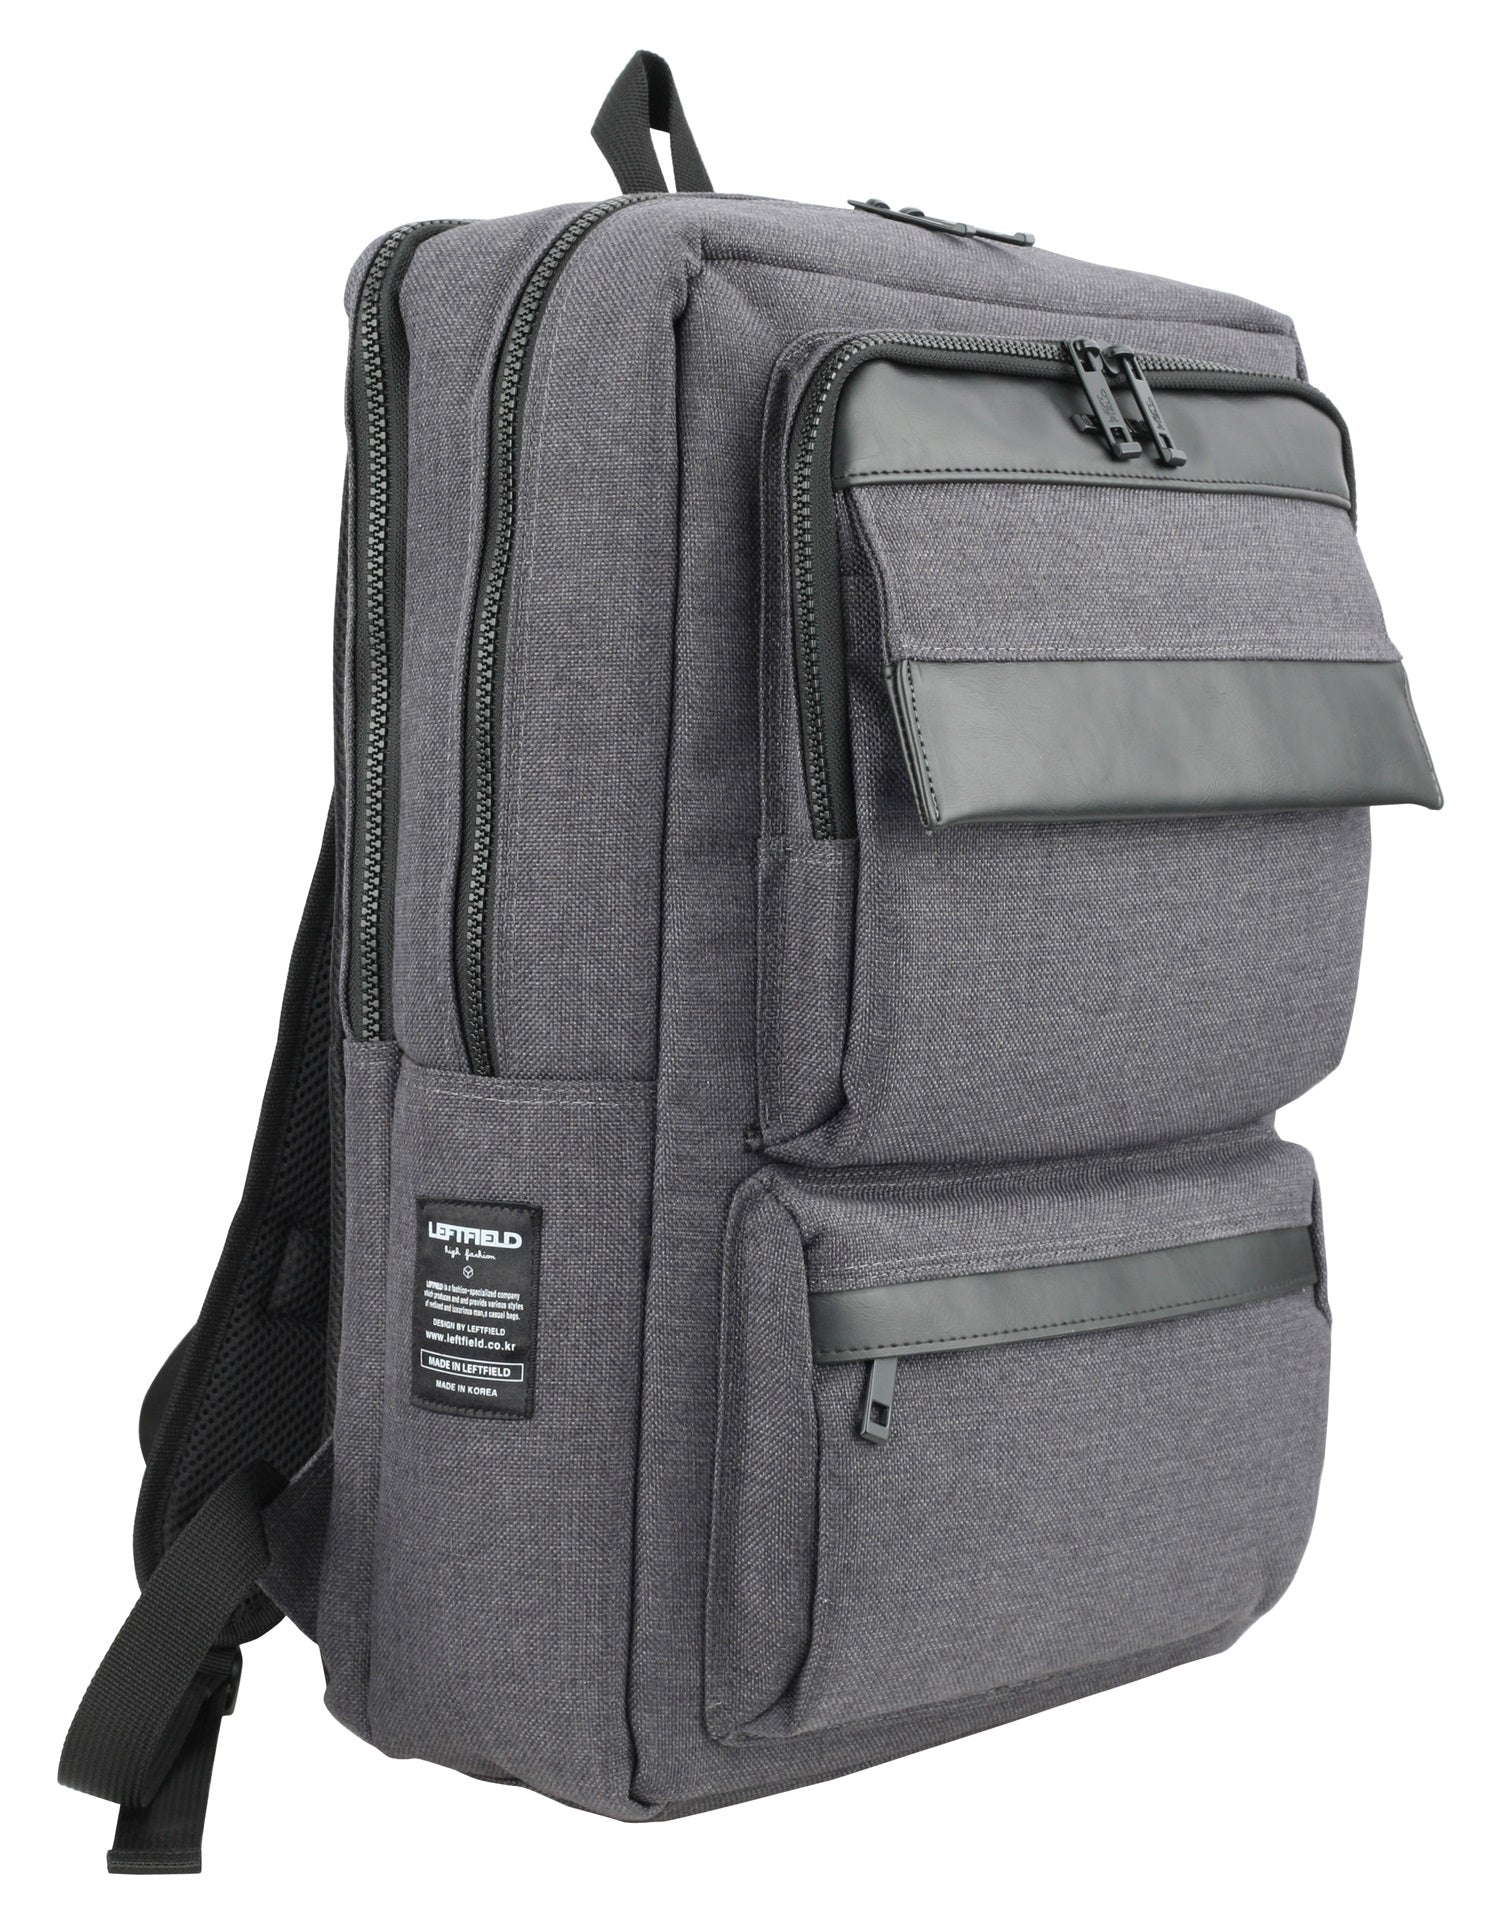 Black Canvas Backpacks School Laptop Travel Camping Rucksacks